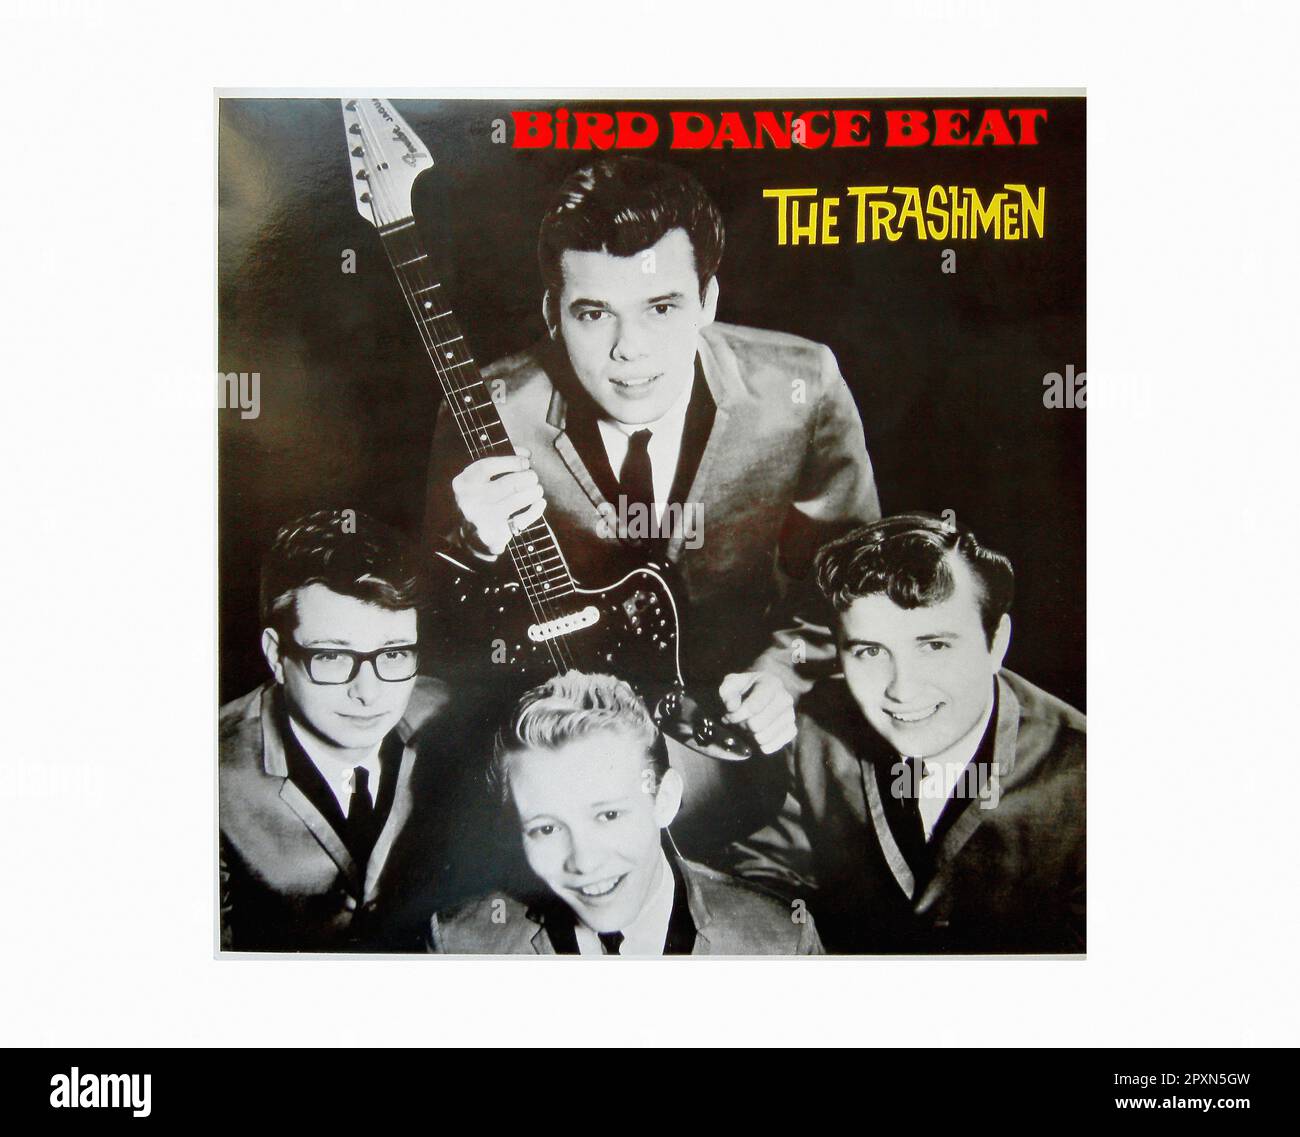 The Trashmen - Bird Beat - Vintage Vinyl Record Sleeve Stock Photo - Alamy